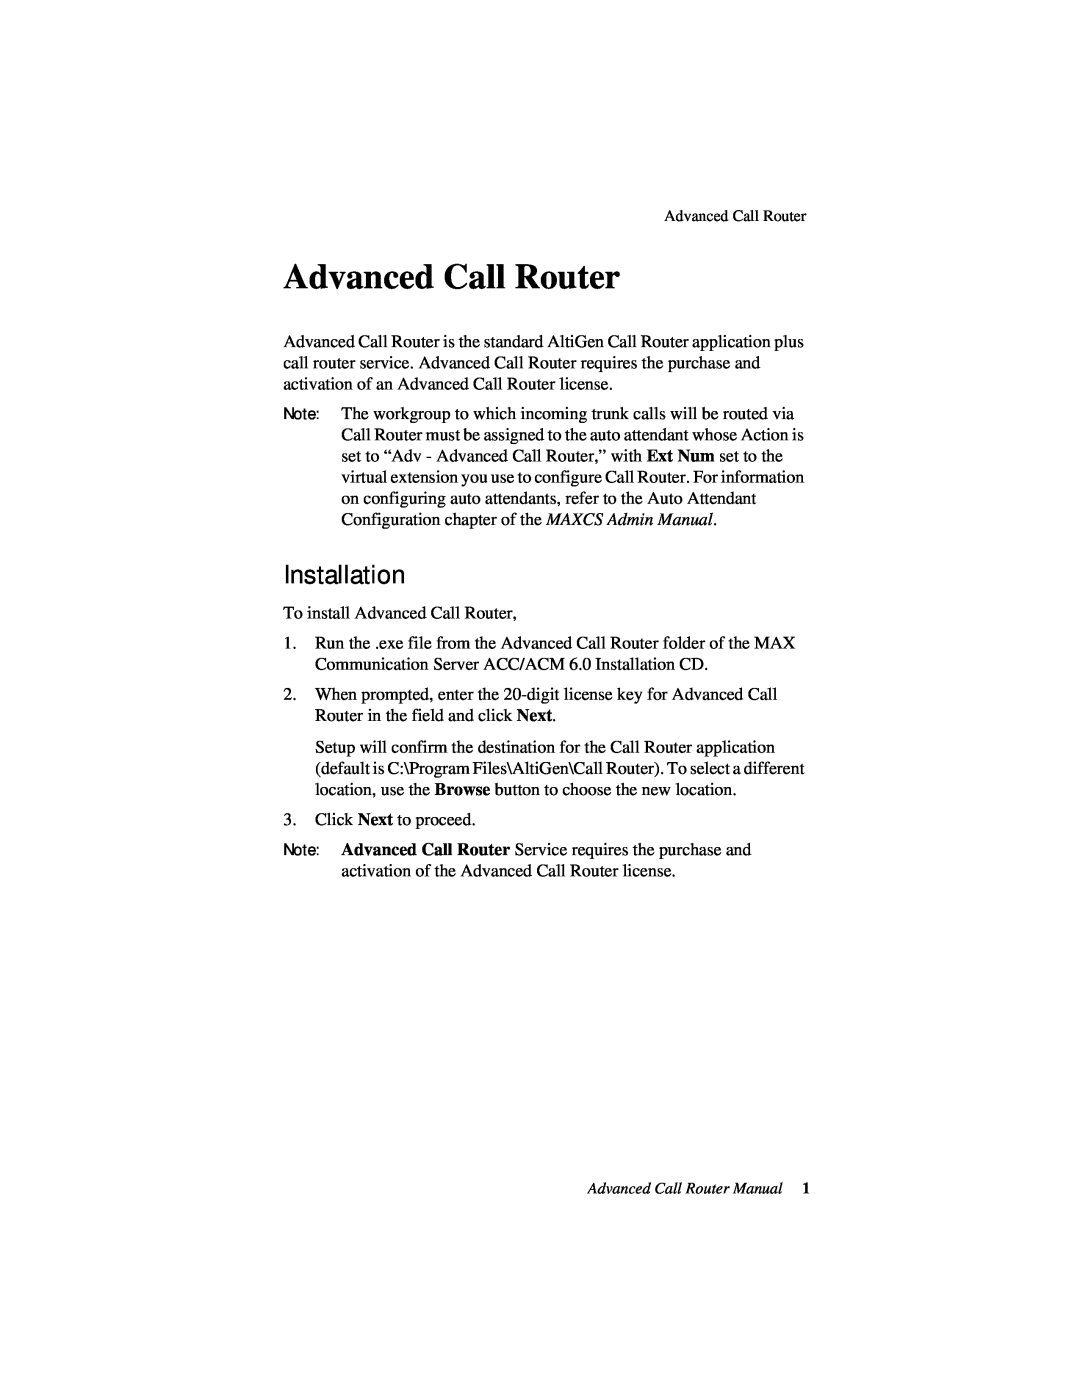 AltiGen comm 6/2008 4510-0001-6.0 manual Advanced Call Router, Installation 